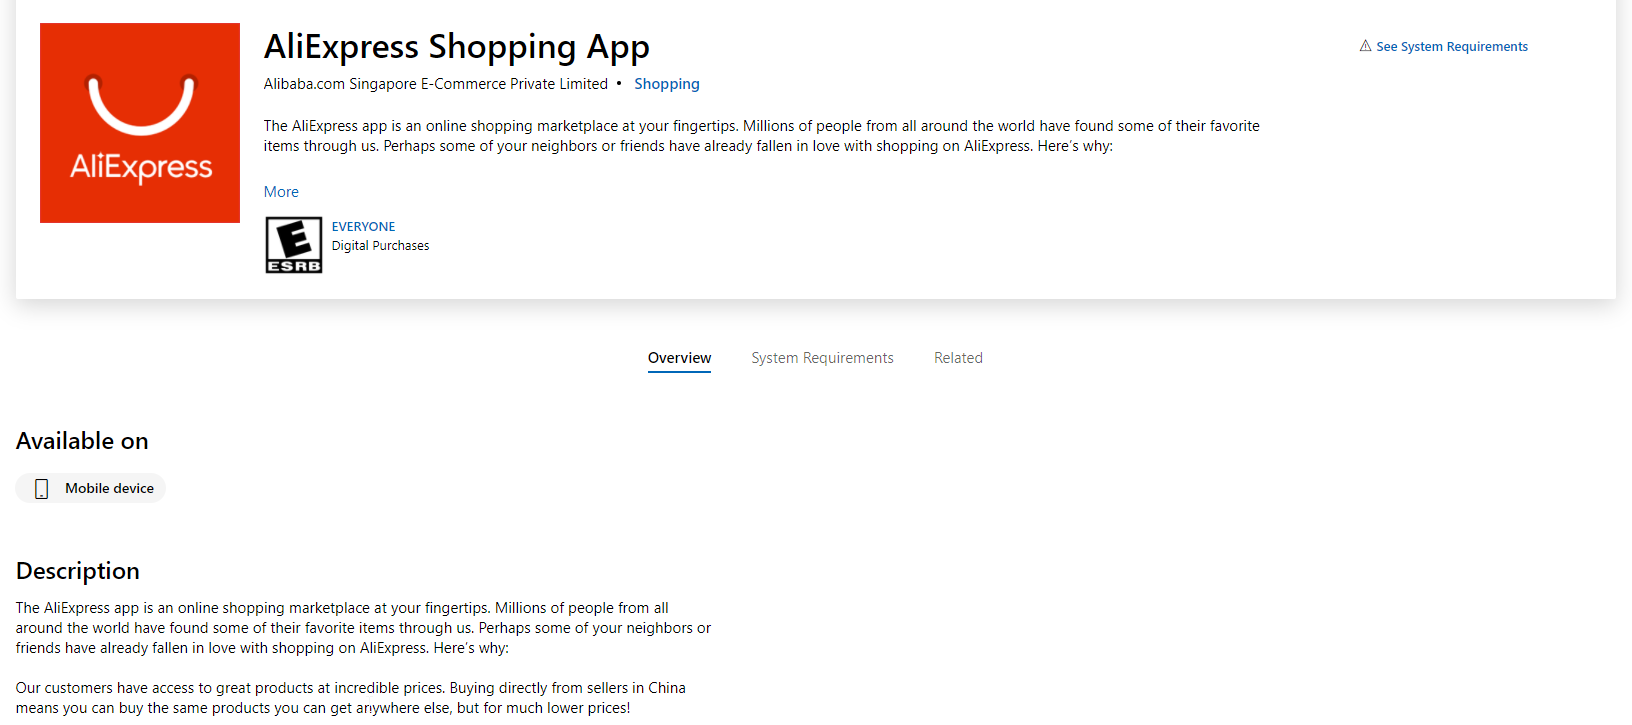 The AliExpress Windows shopping app